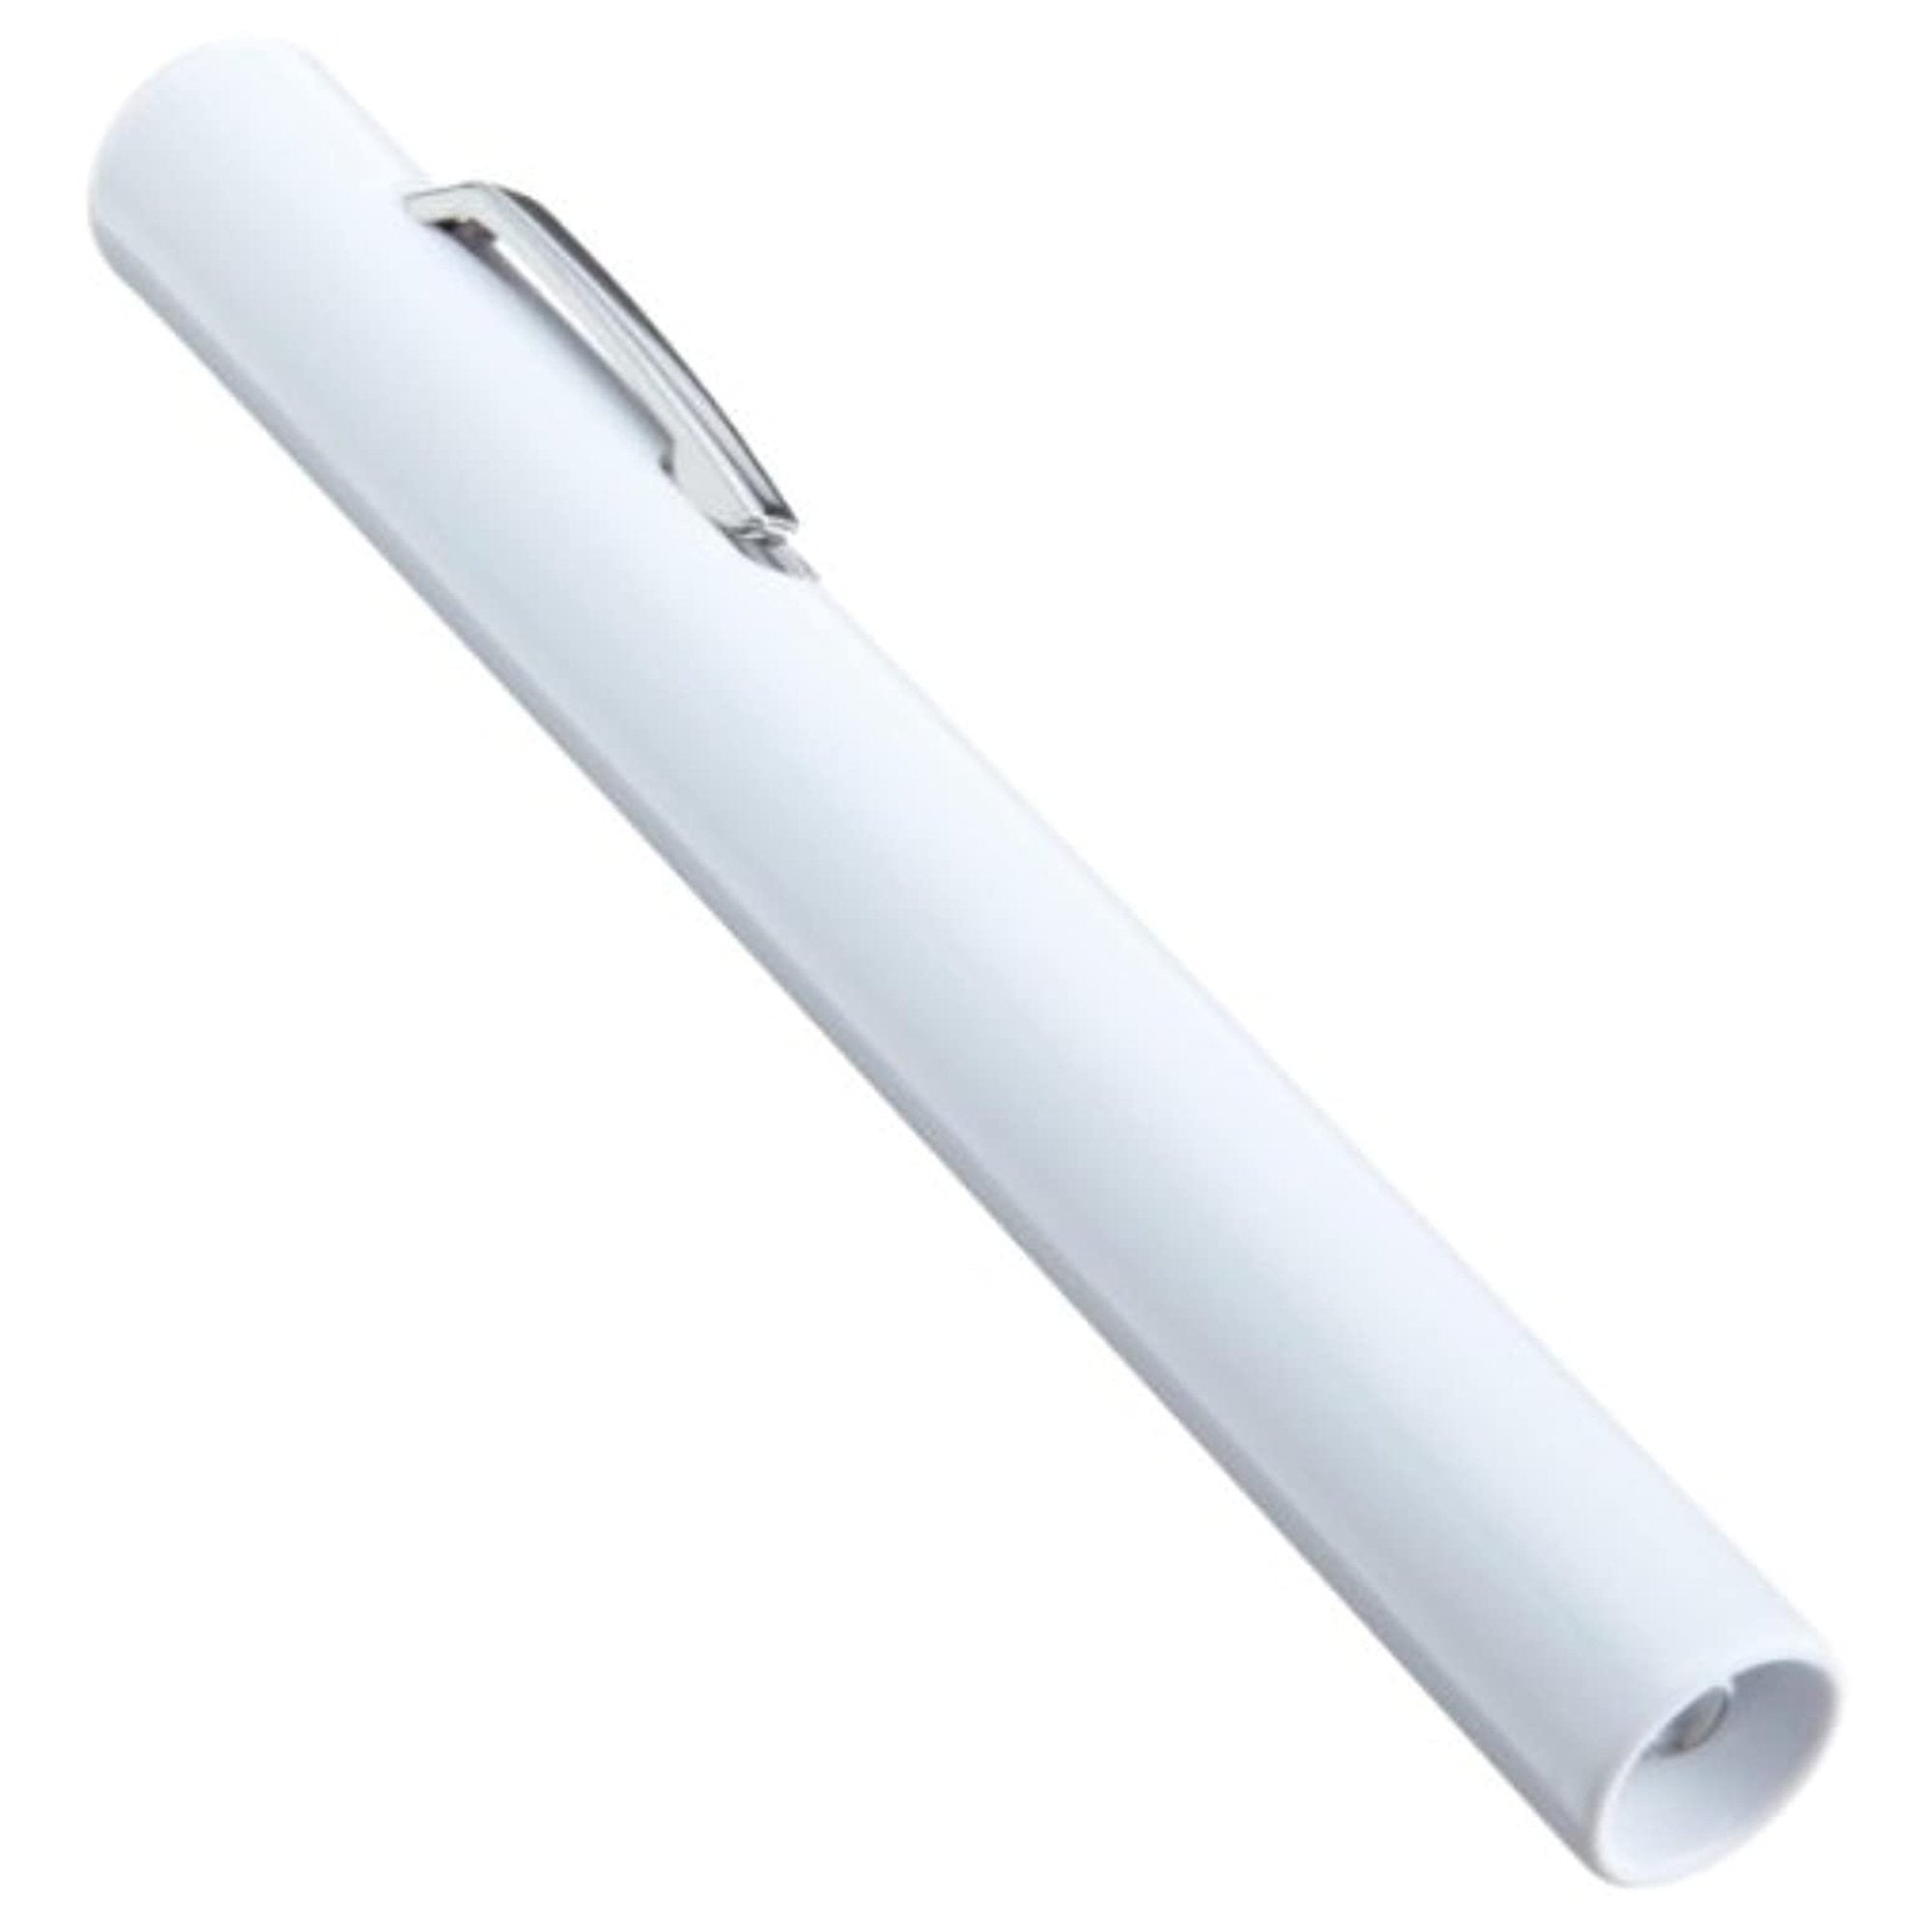 Penlight Adlite White Color 5 Inch Disposable